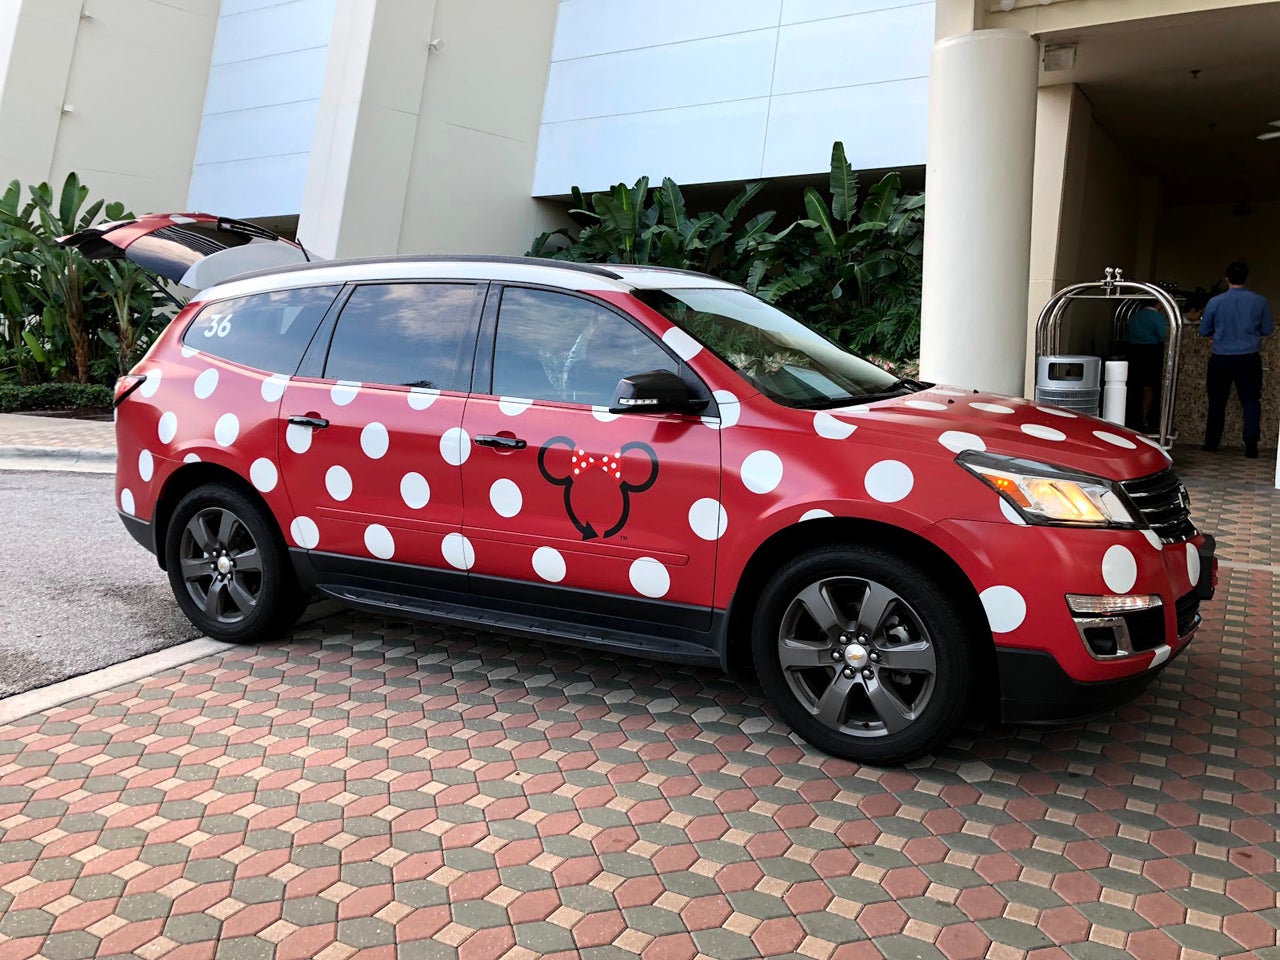 Red and white polka dot van at Disney World